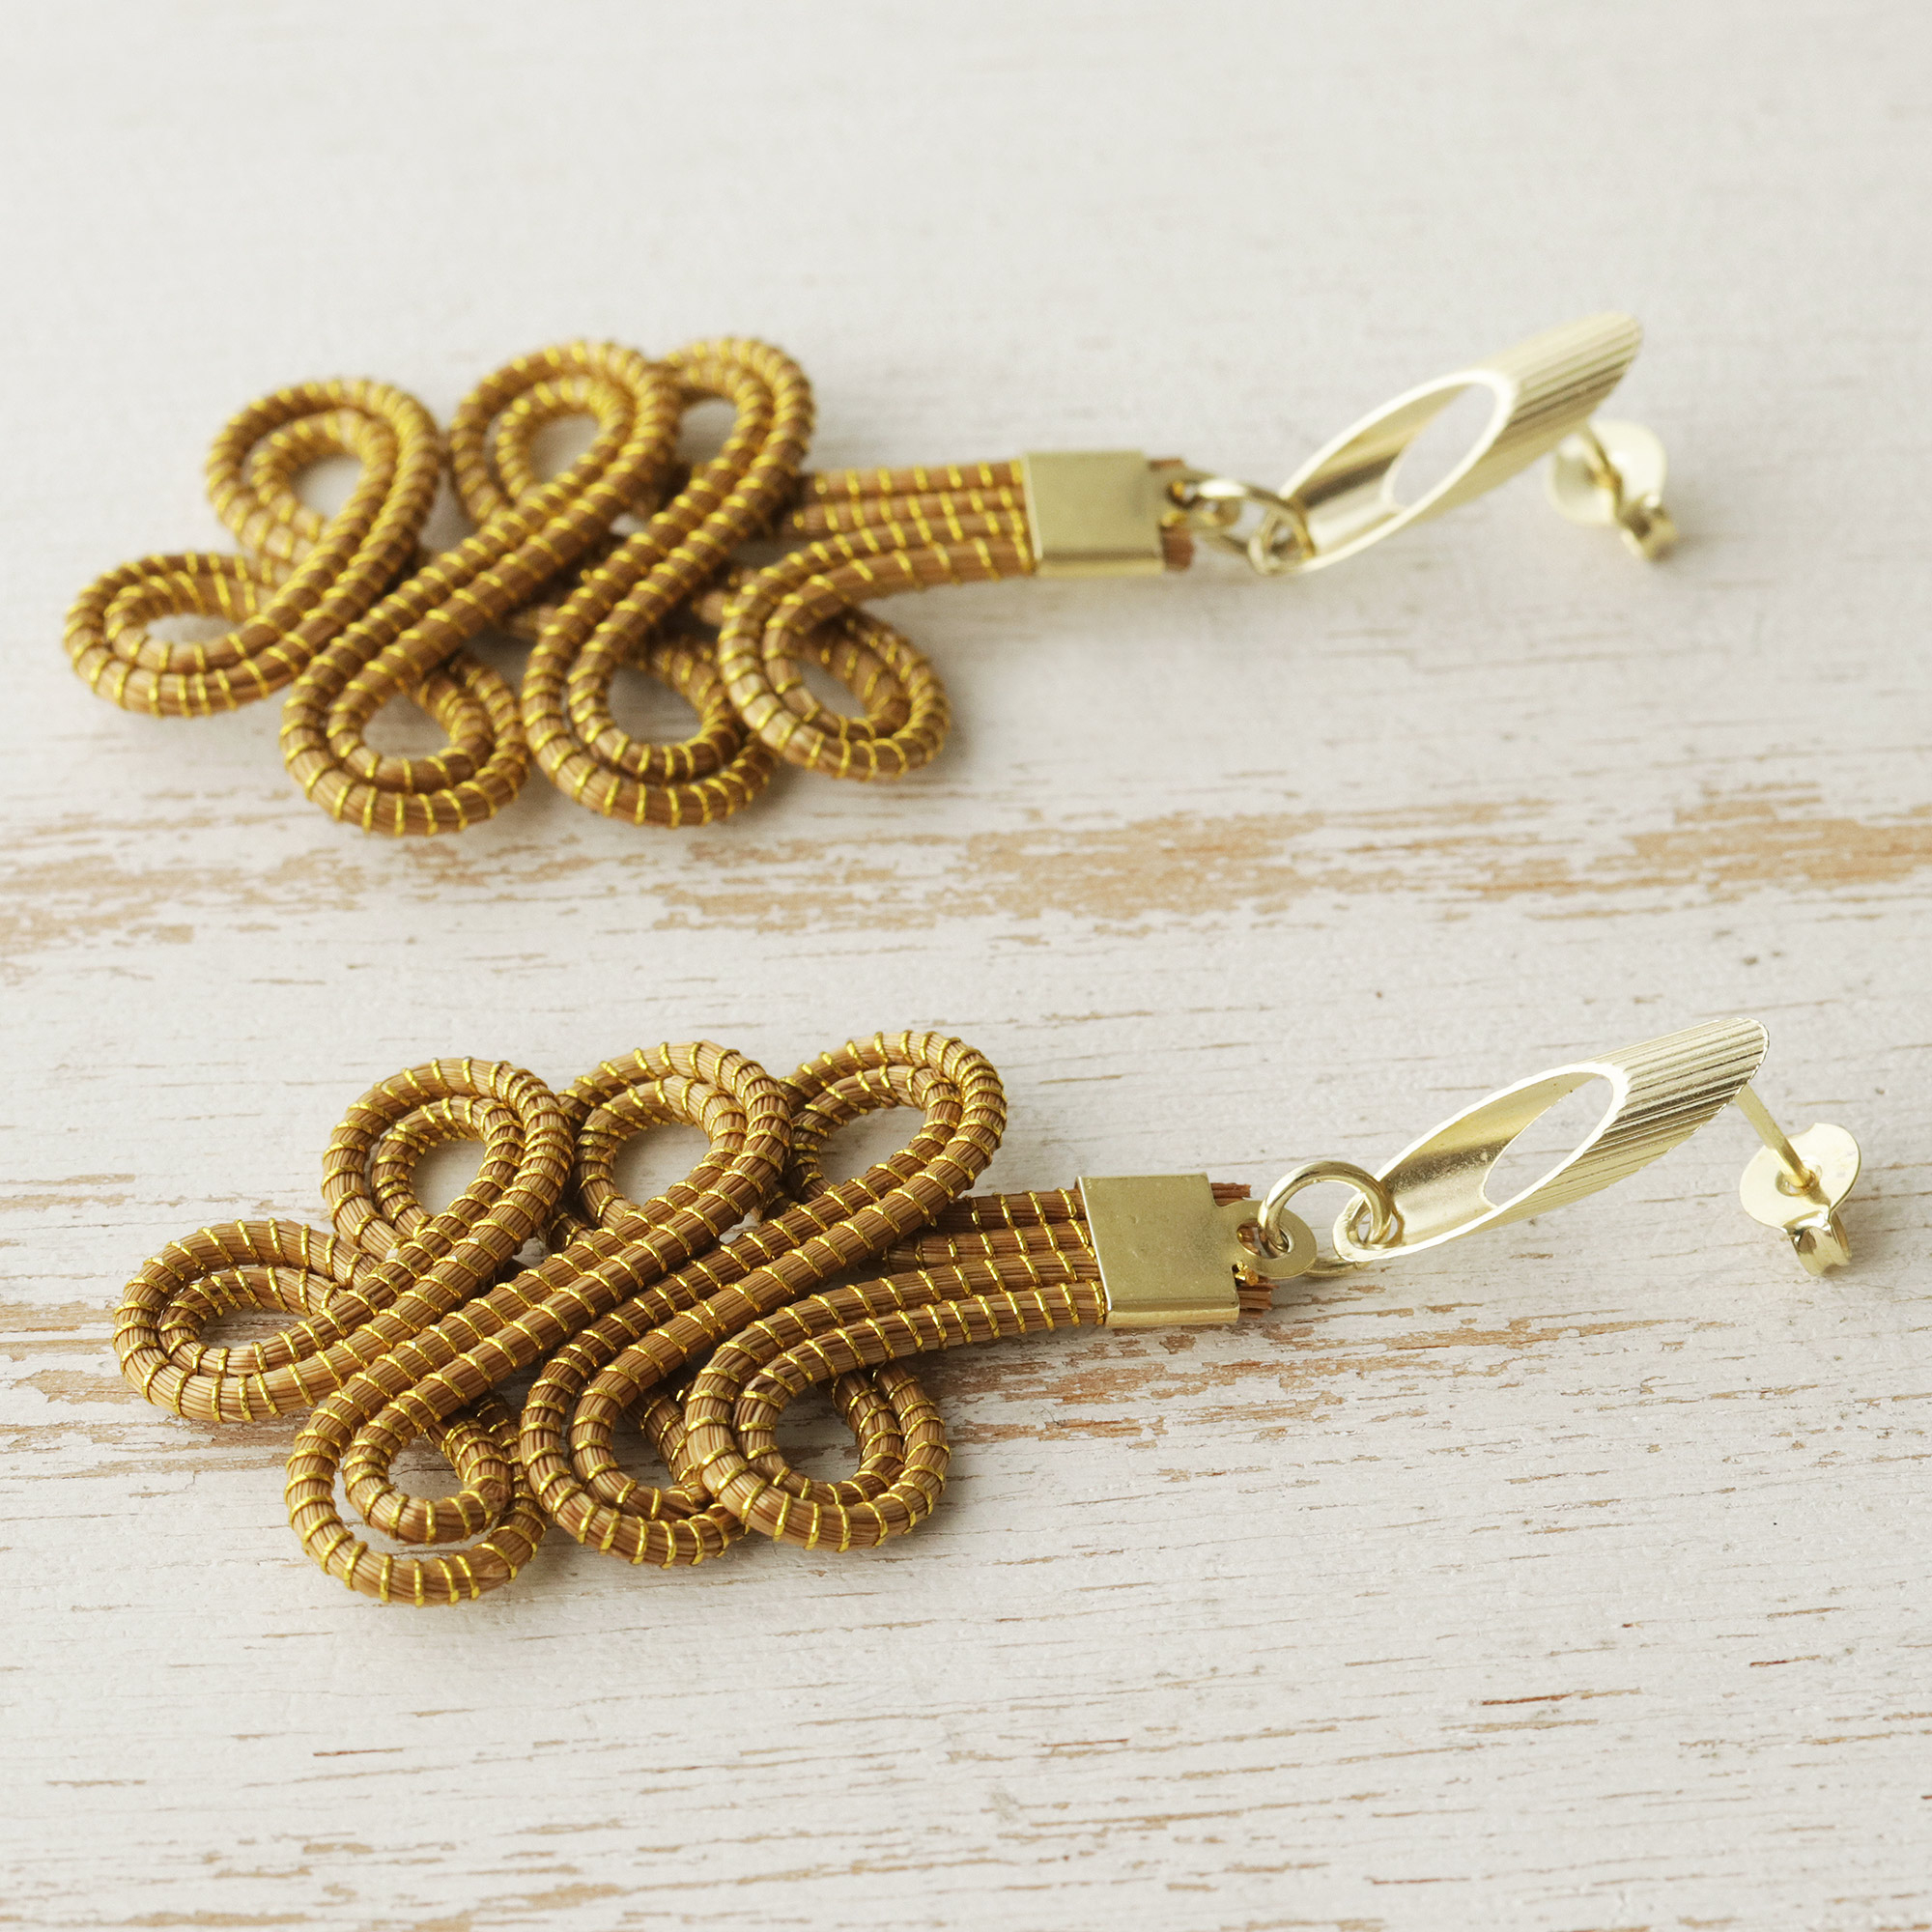 Curvy Brazilian Golden Grass Earrings With 18k Gold Plate Capricious Coils Novica